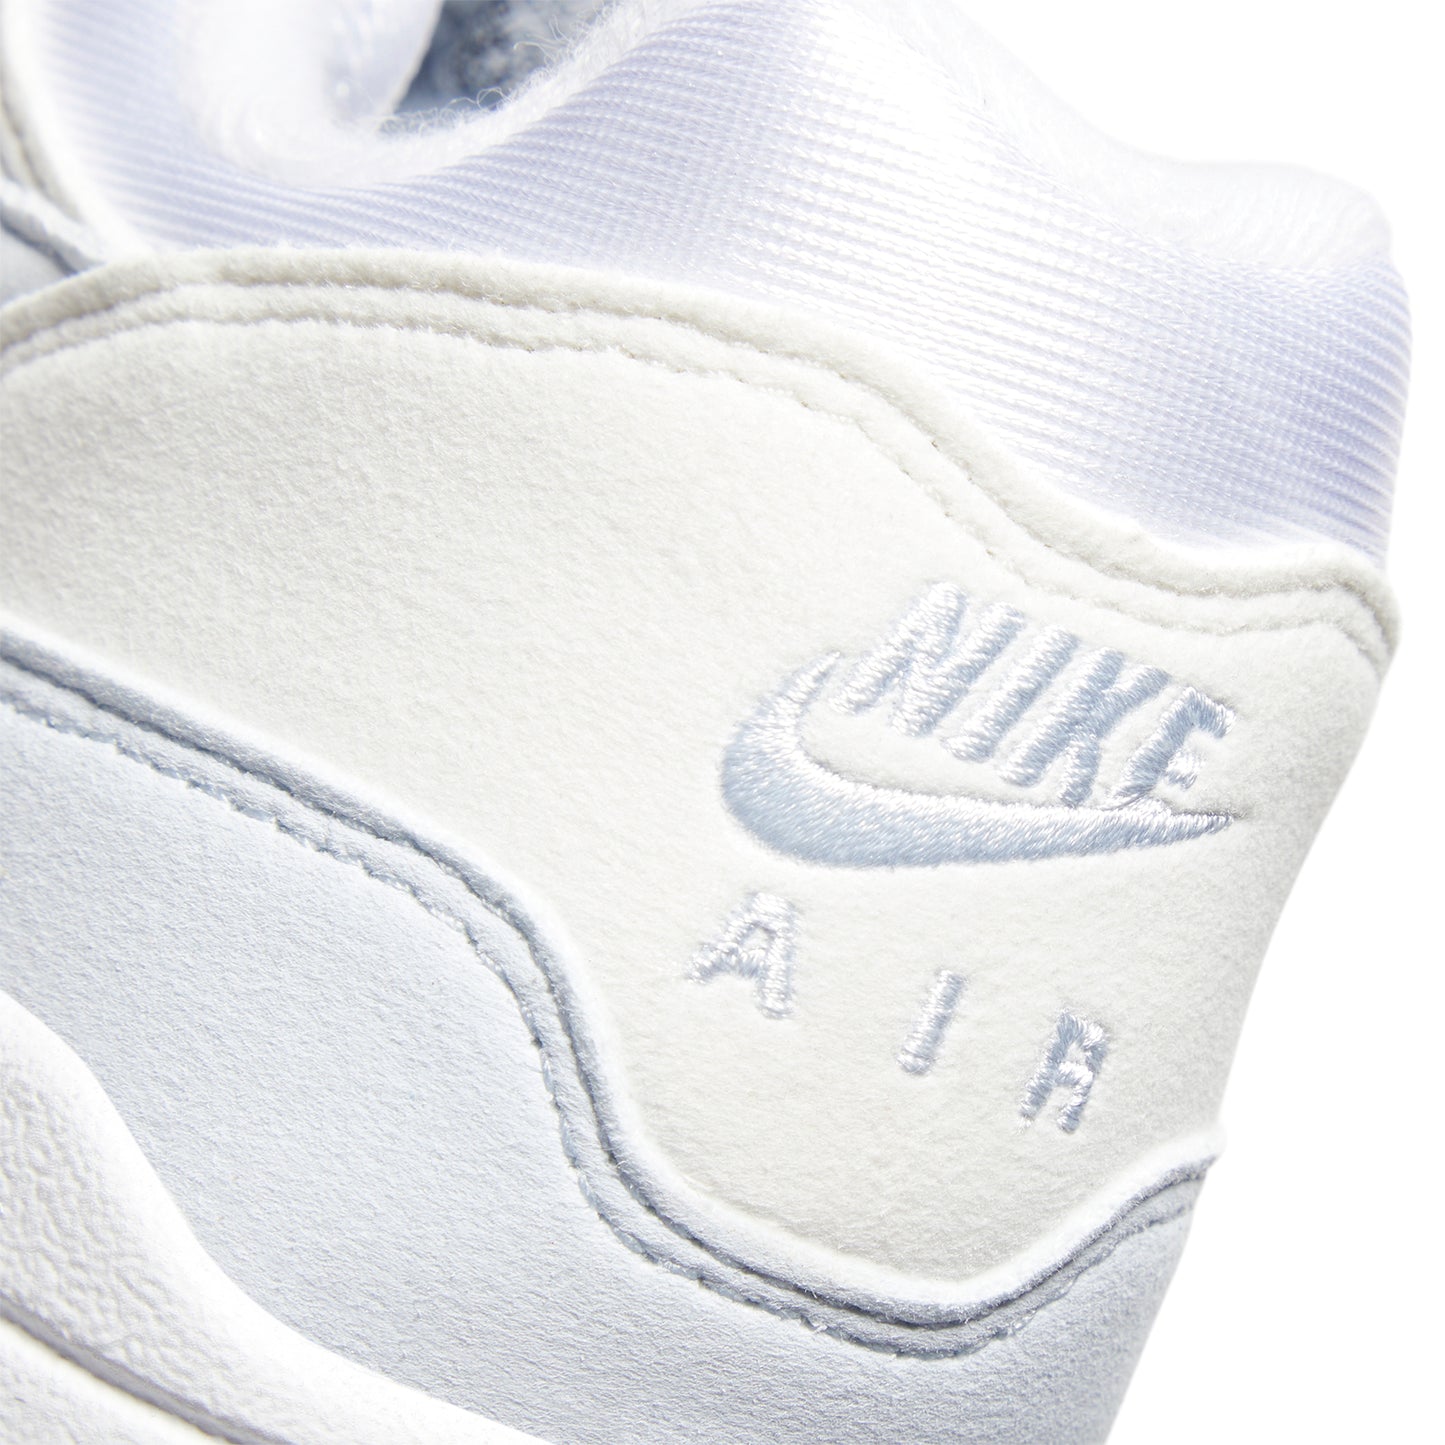 Nike Womens Air Max 1 (White/Football Grey/Platinum Tint/Black)